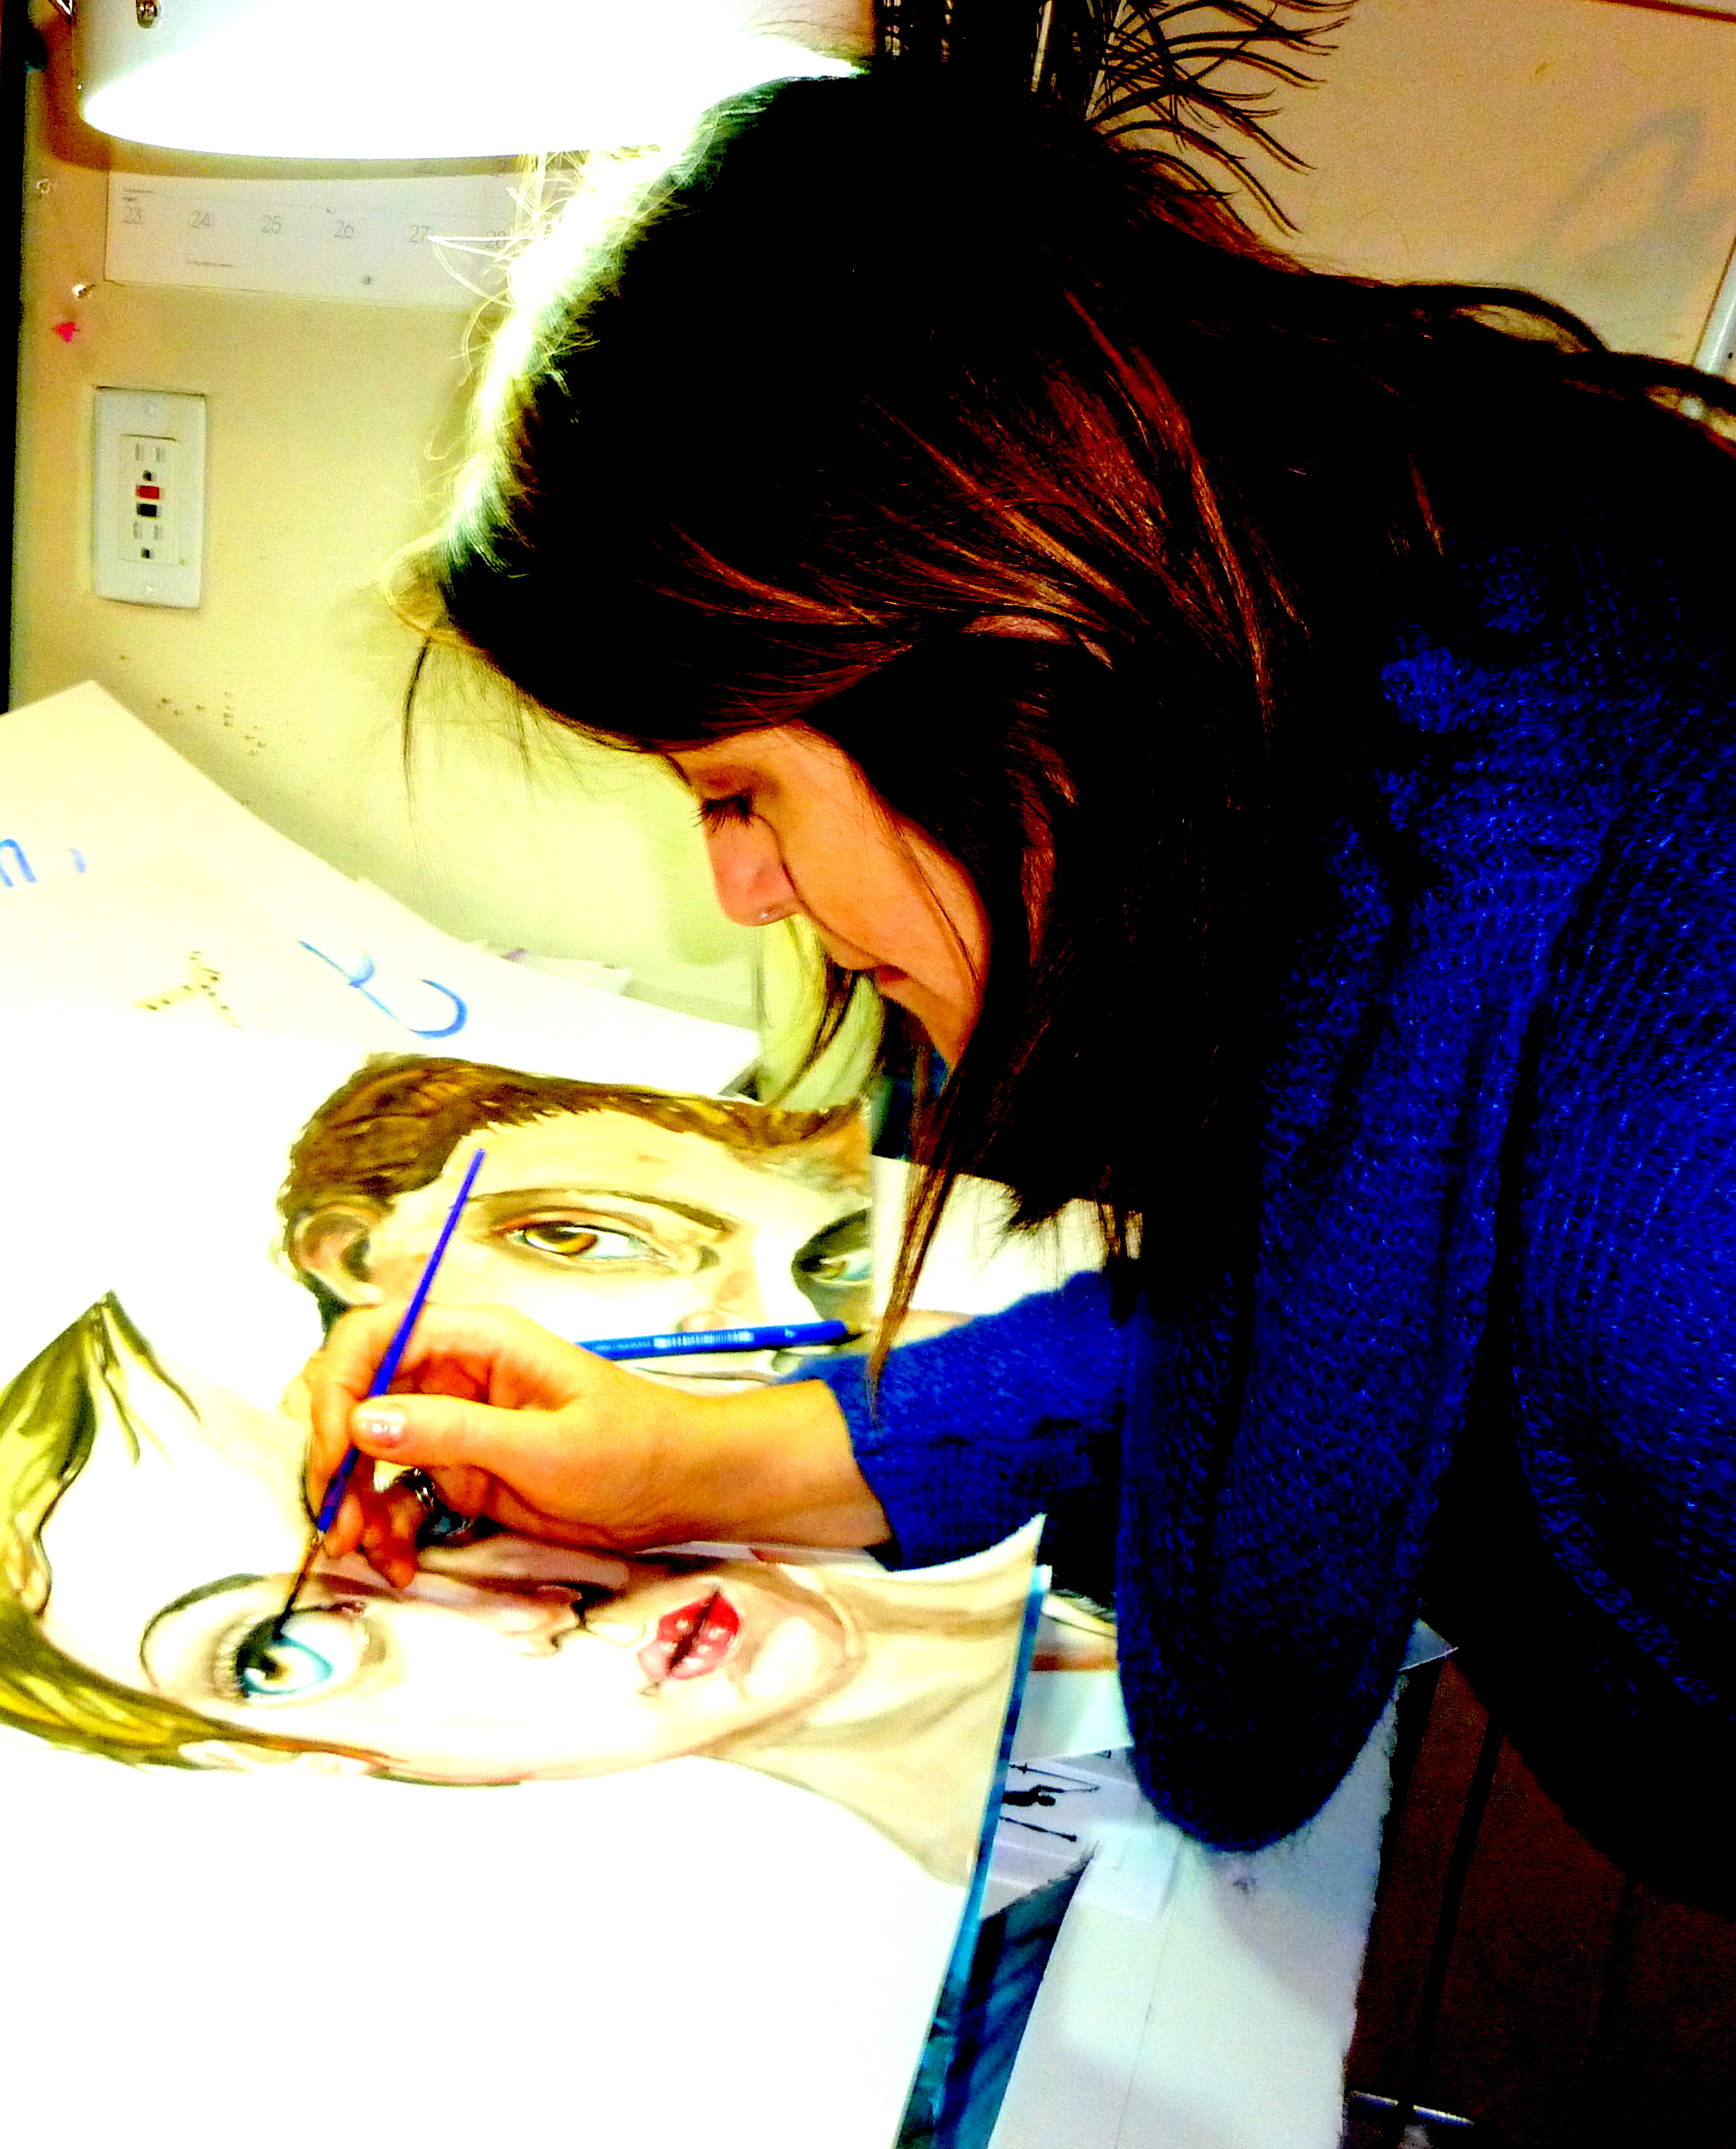 Jennifer working in her studio